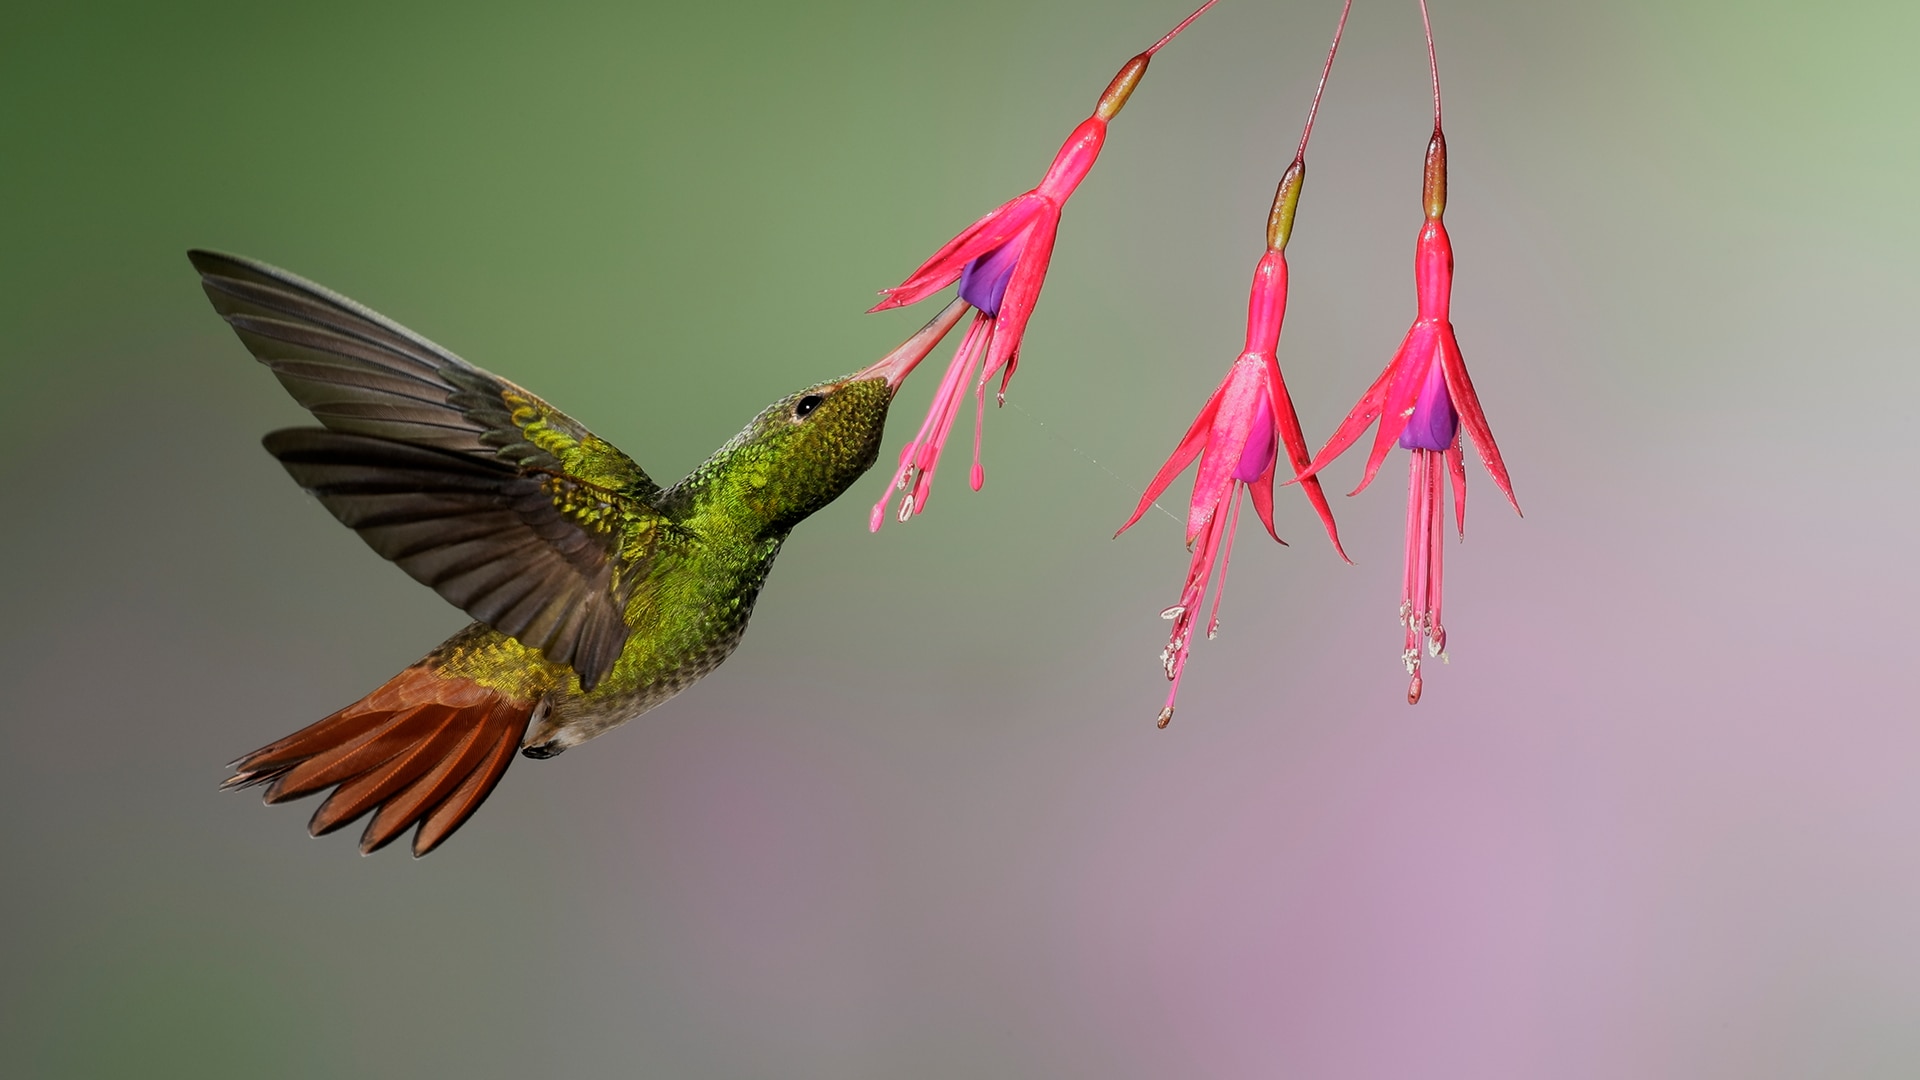 Rufous-tailed hummingbird feeding on nectar